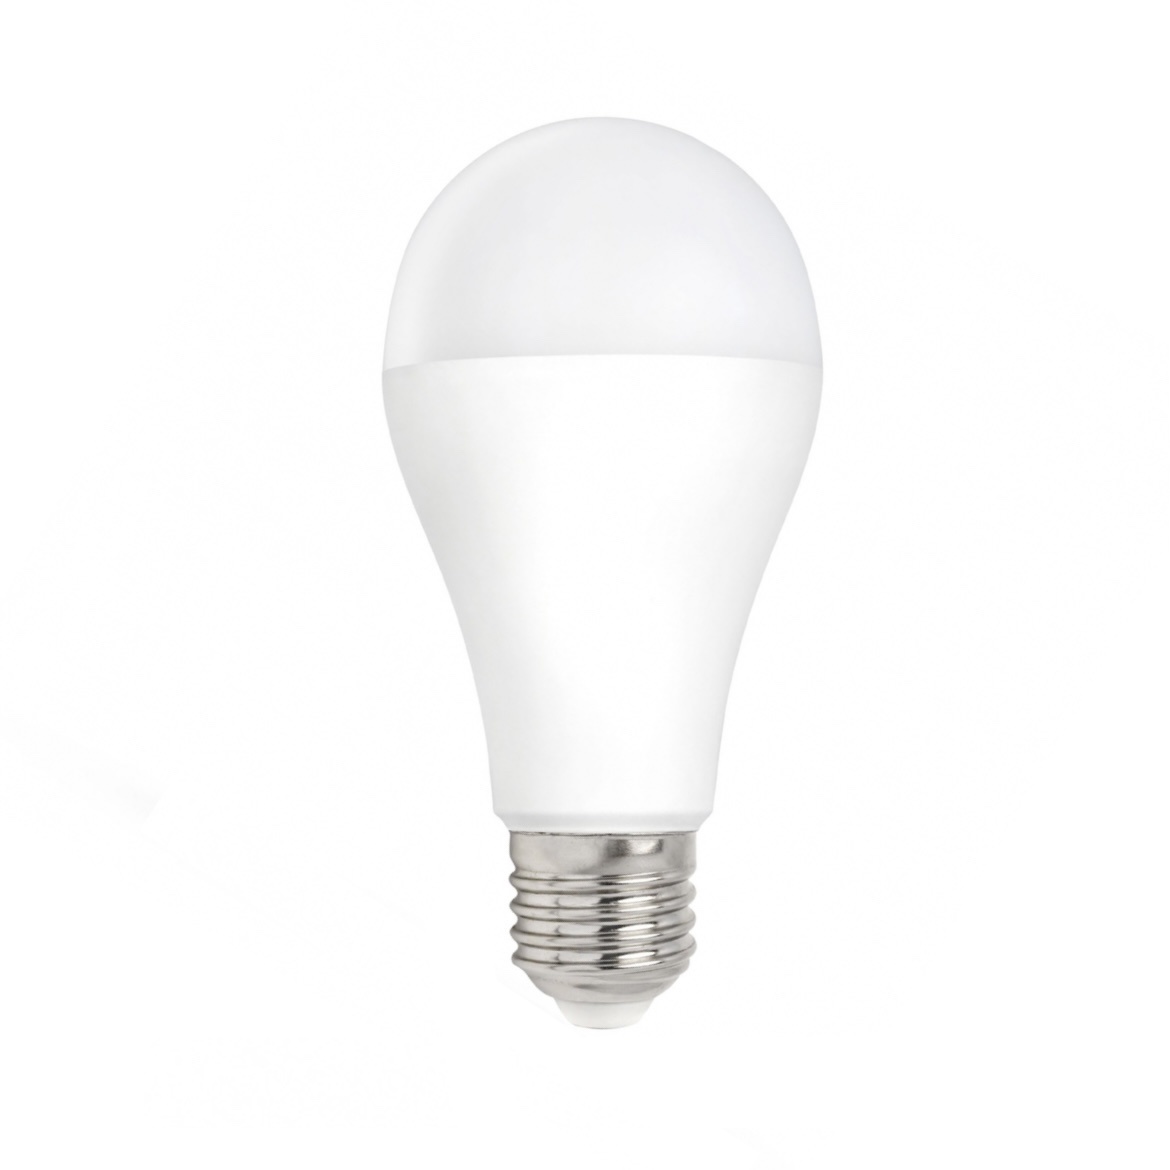 Weggelaten honderd In de meeste gevallen LED lamp dimbaar - E27 fitting - 12W vervangt 75W - 4000K -  Ledlichtdiscounter.nl